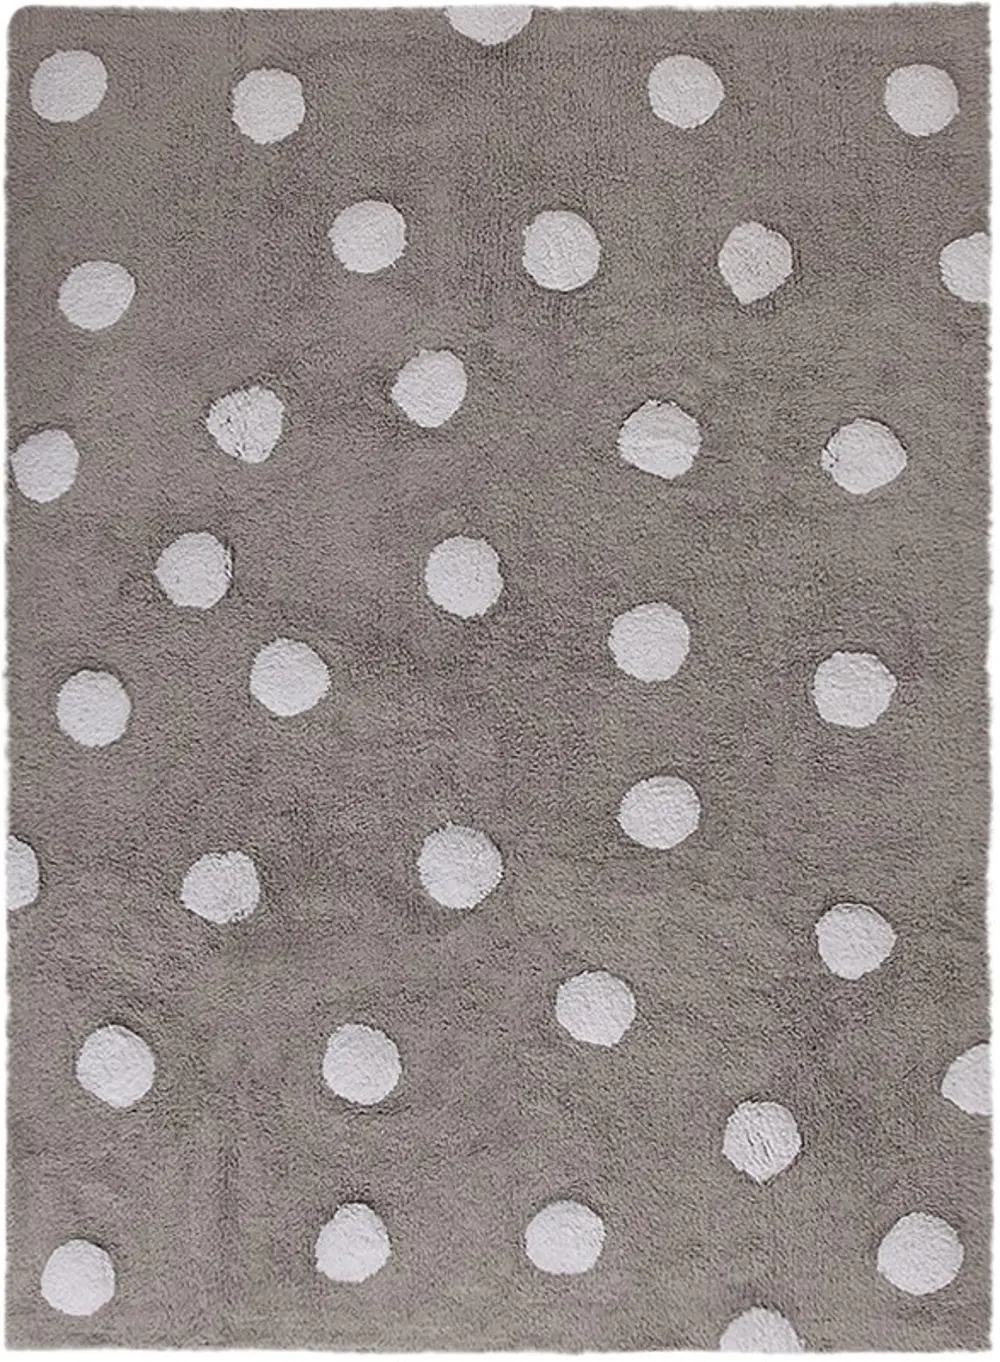 C-00005 4 x 5 Small Polka Dots Gray and White Washable Rug-1